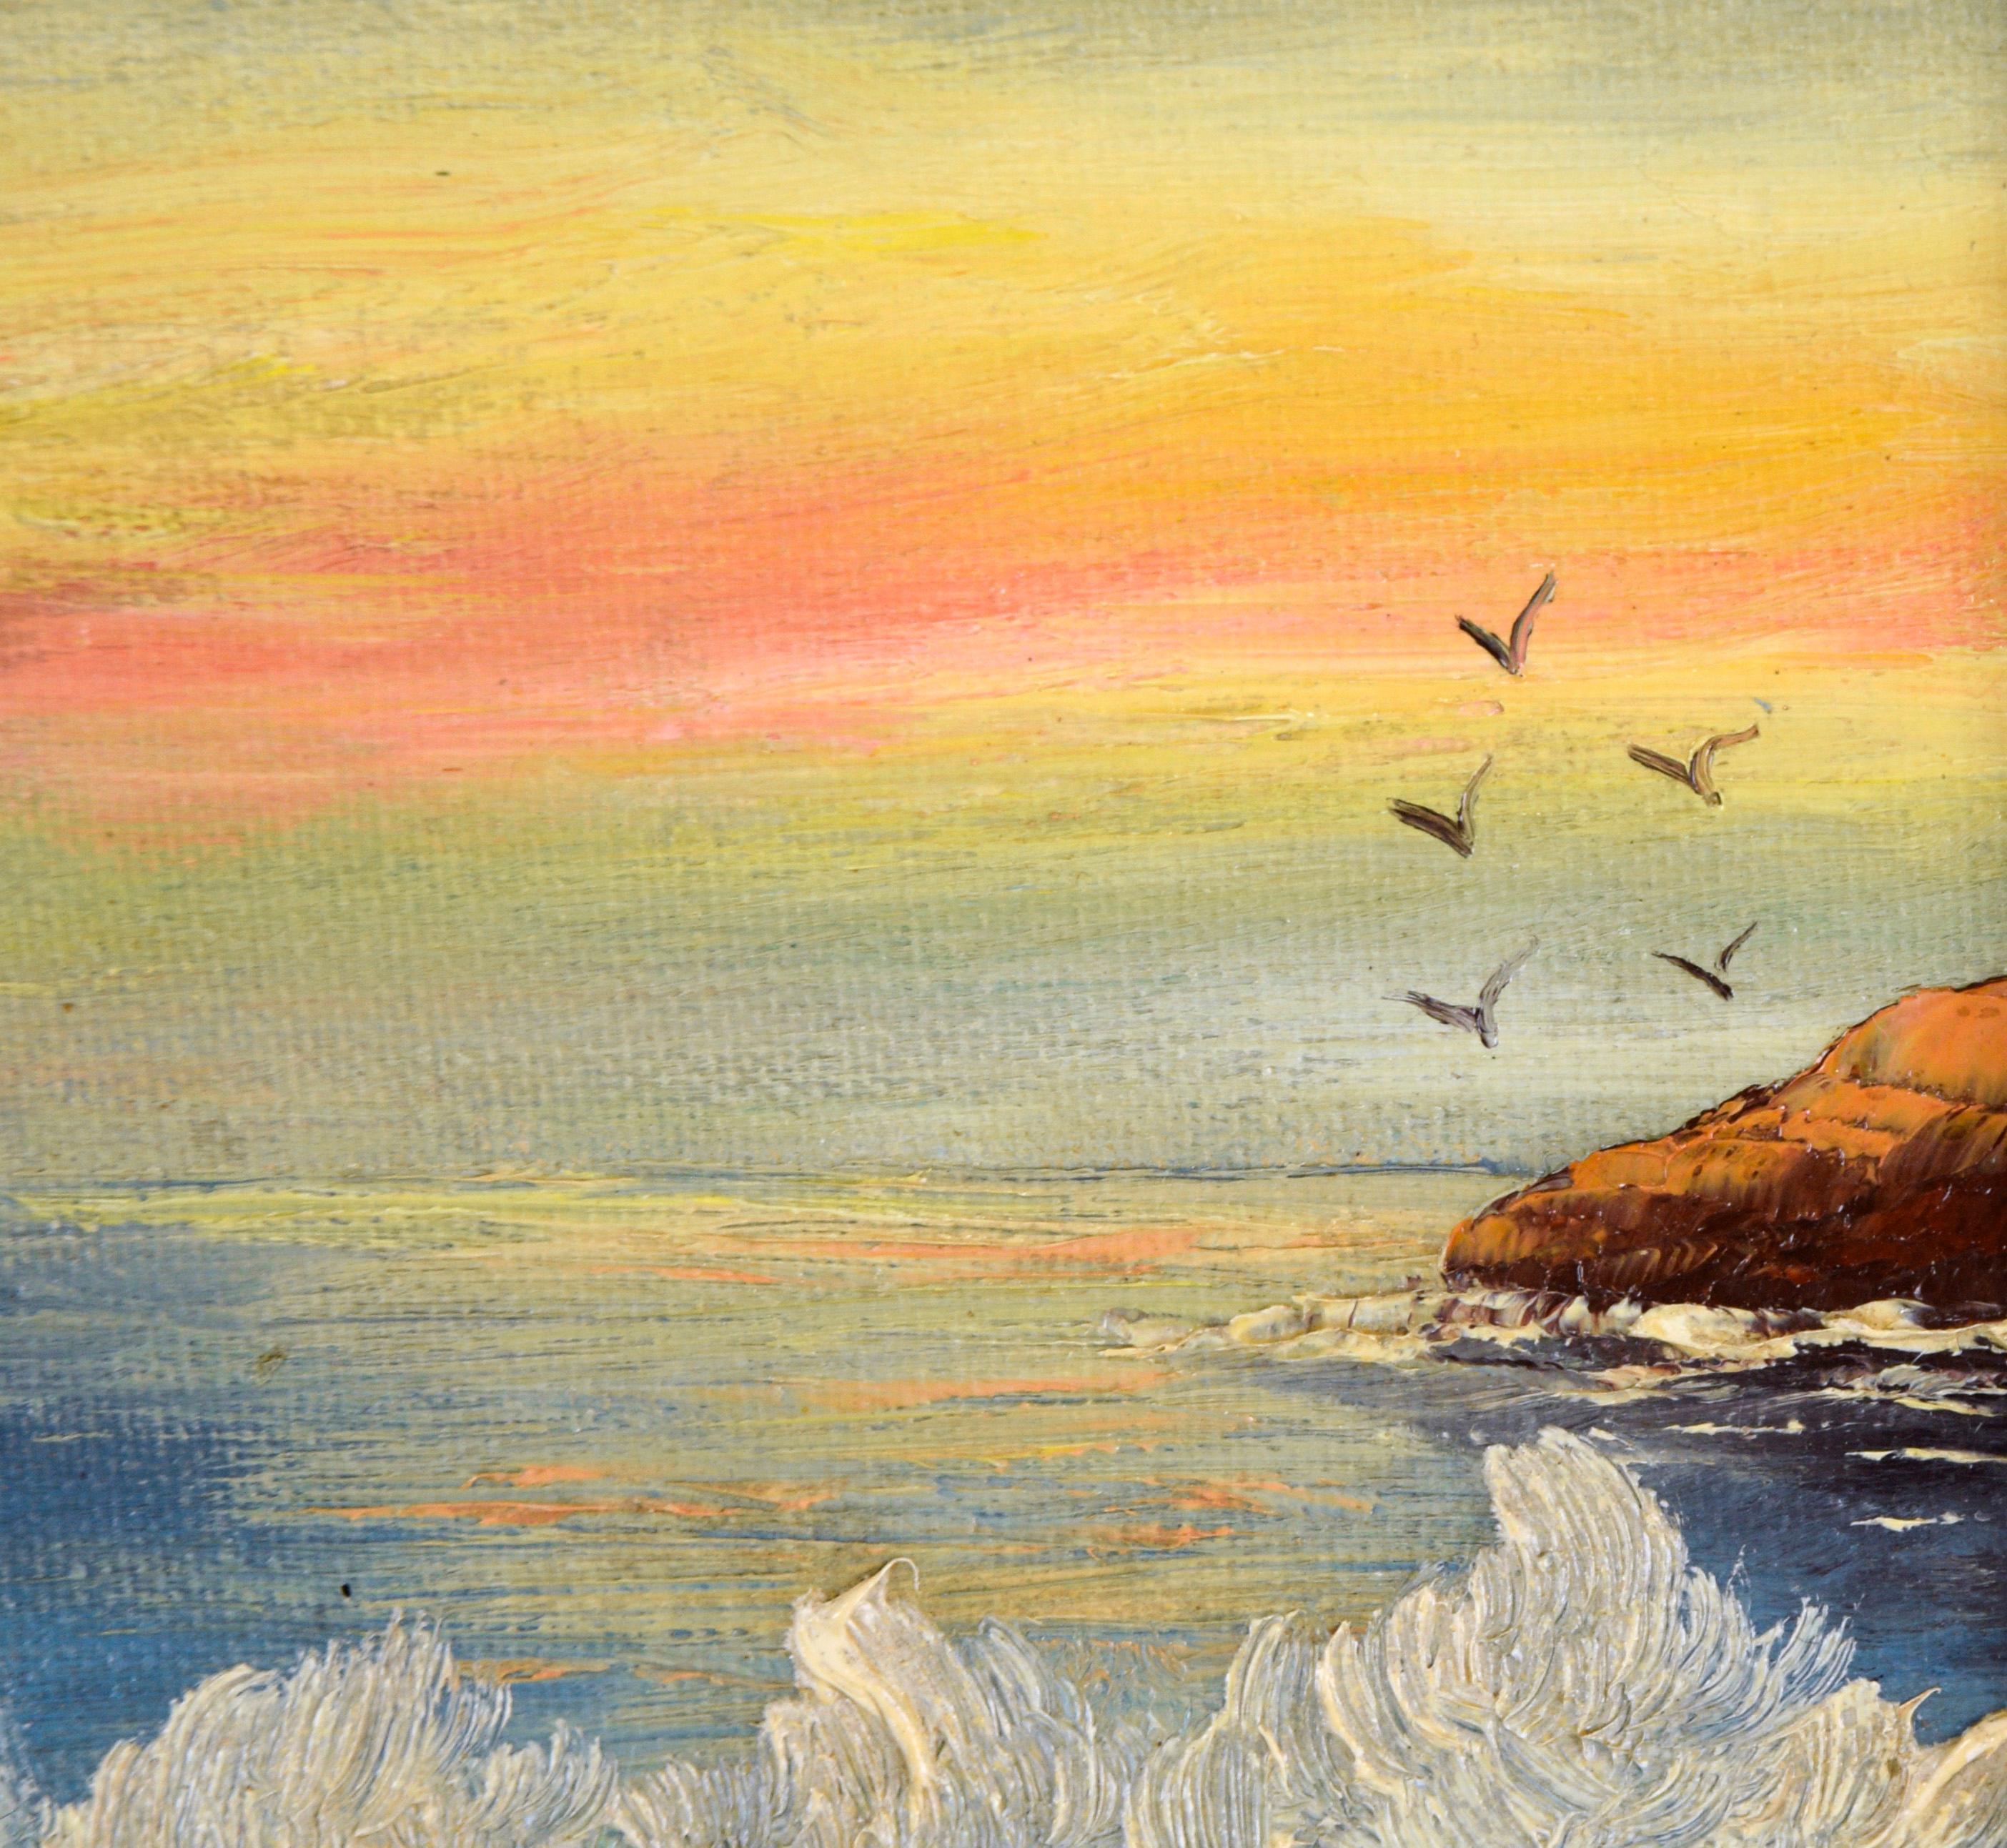 Ocean Splash at Sunset - Small Plein Air Oil Painting on Canvas 1